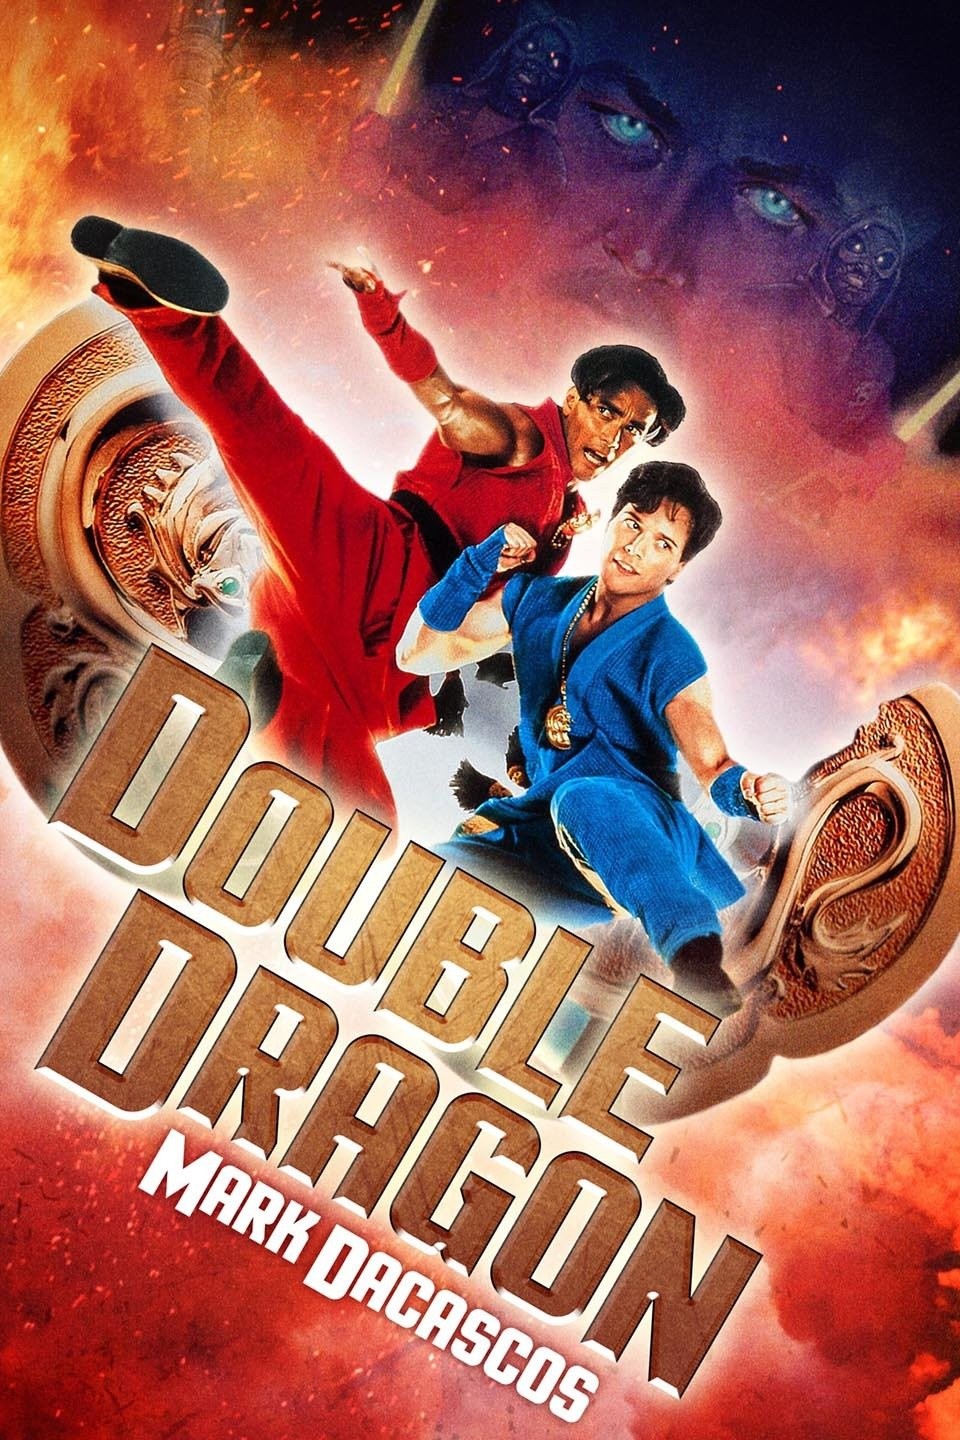 Double Dragon (1994) - Review - Far East Films